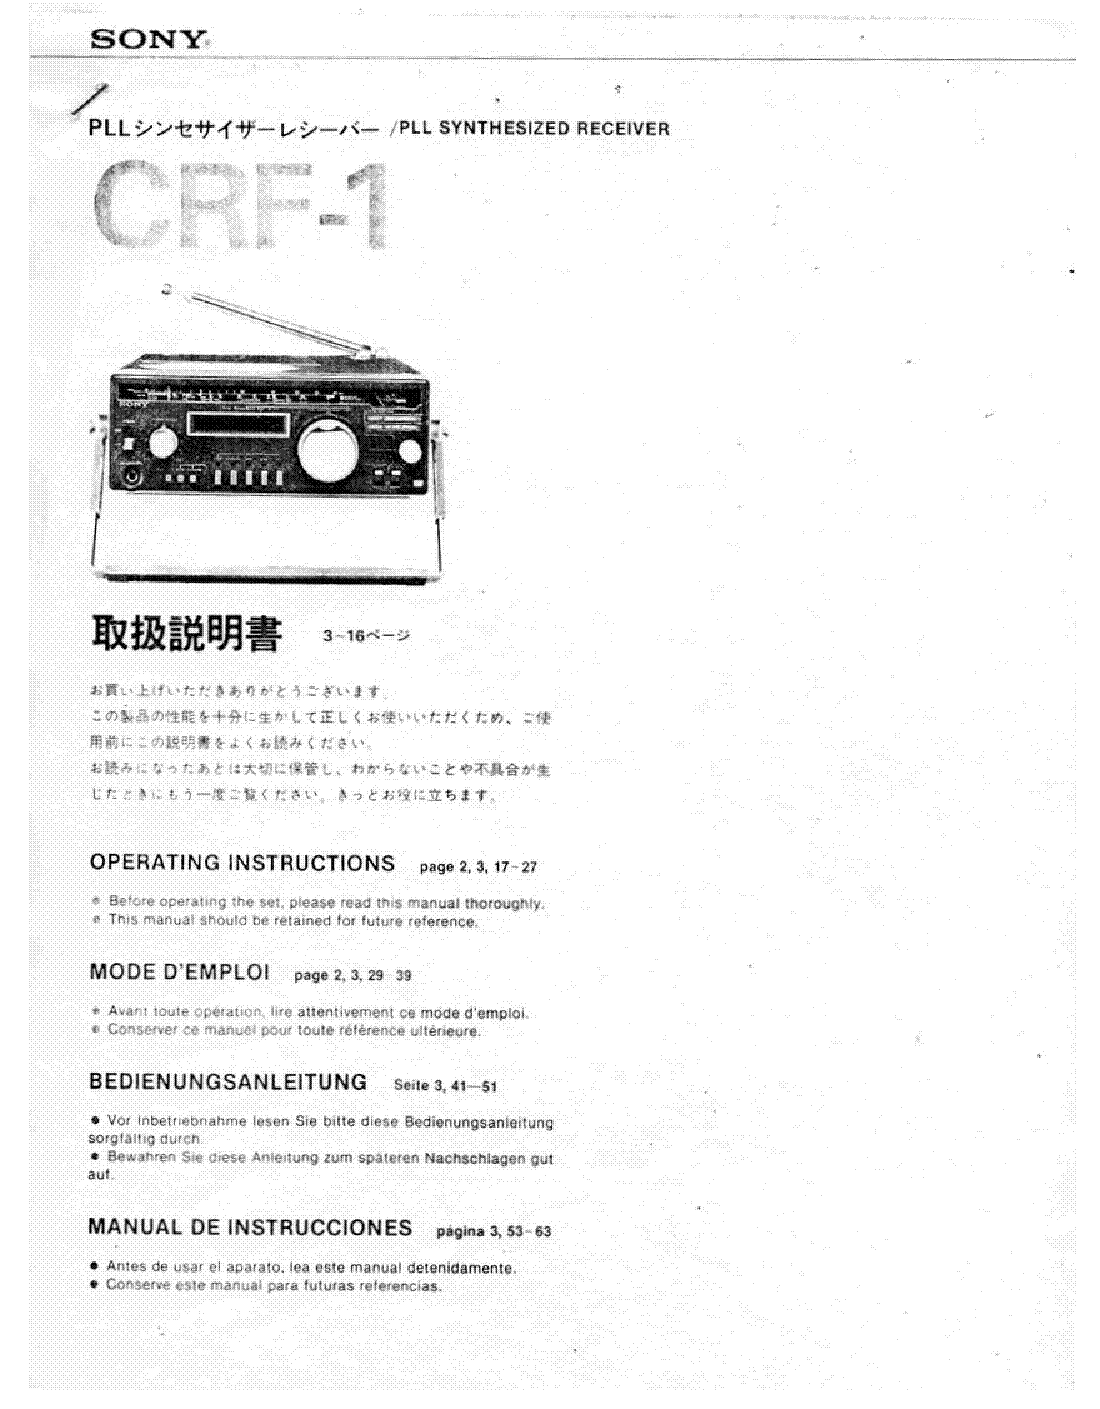 SONY CRF1 RECEIVER Service Manual download, schematics, eeprom, repair